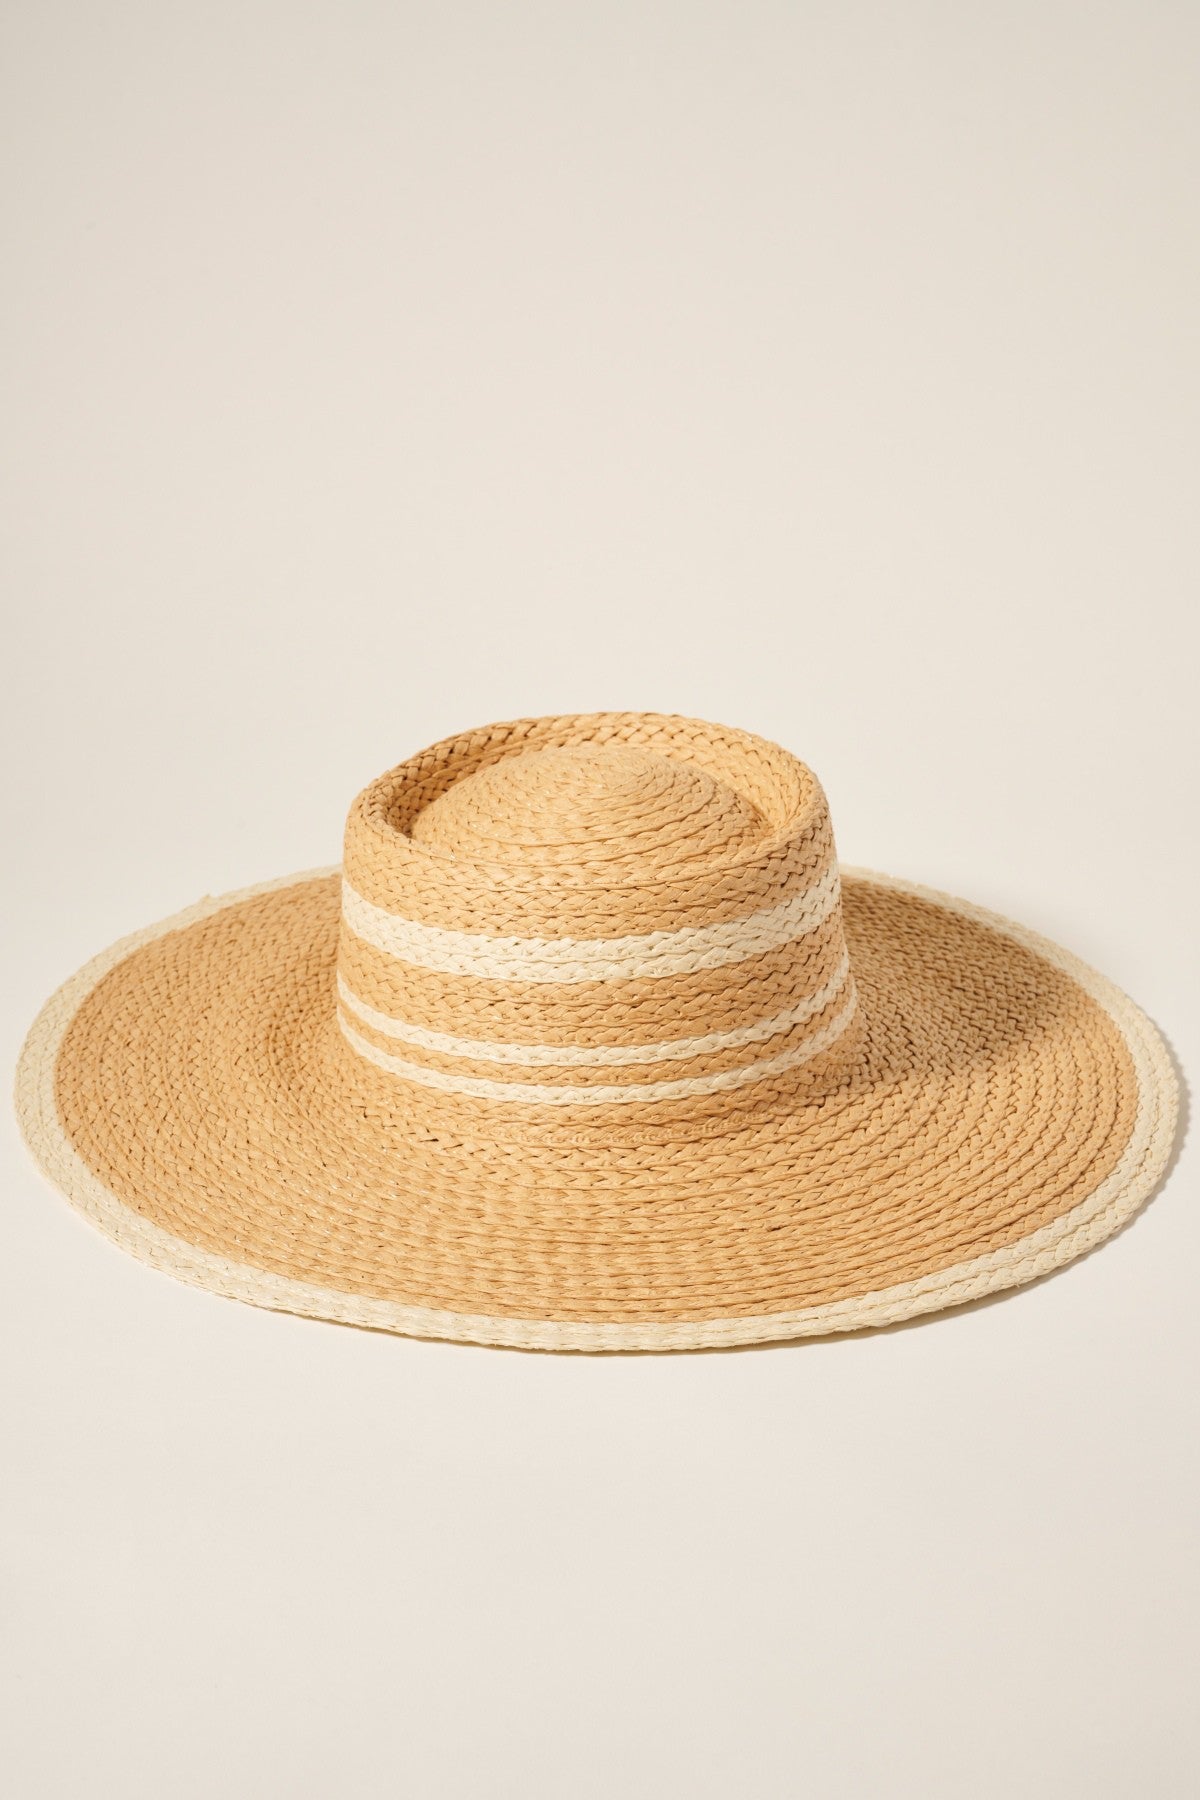 Miss Panama Hat